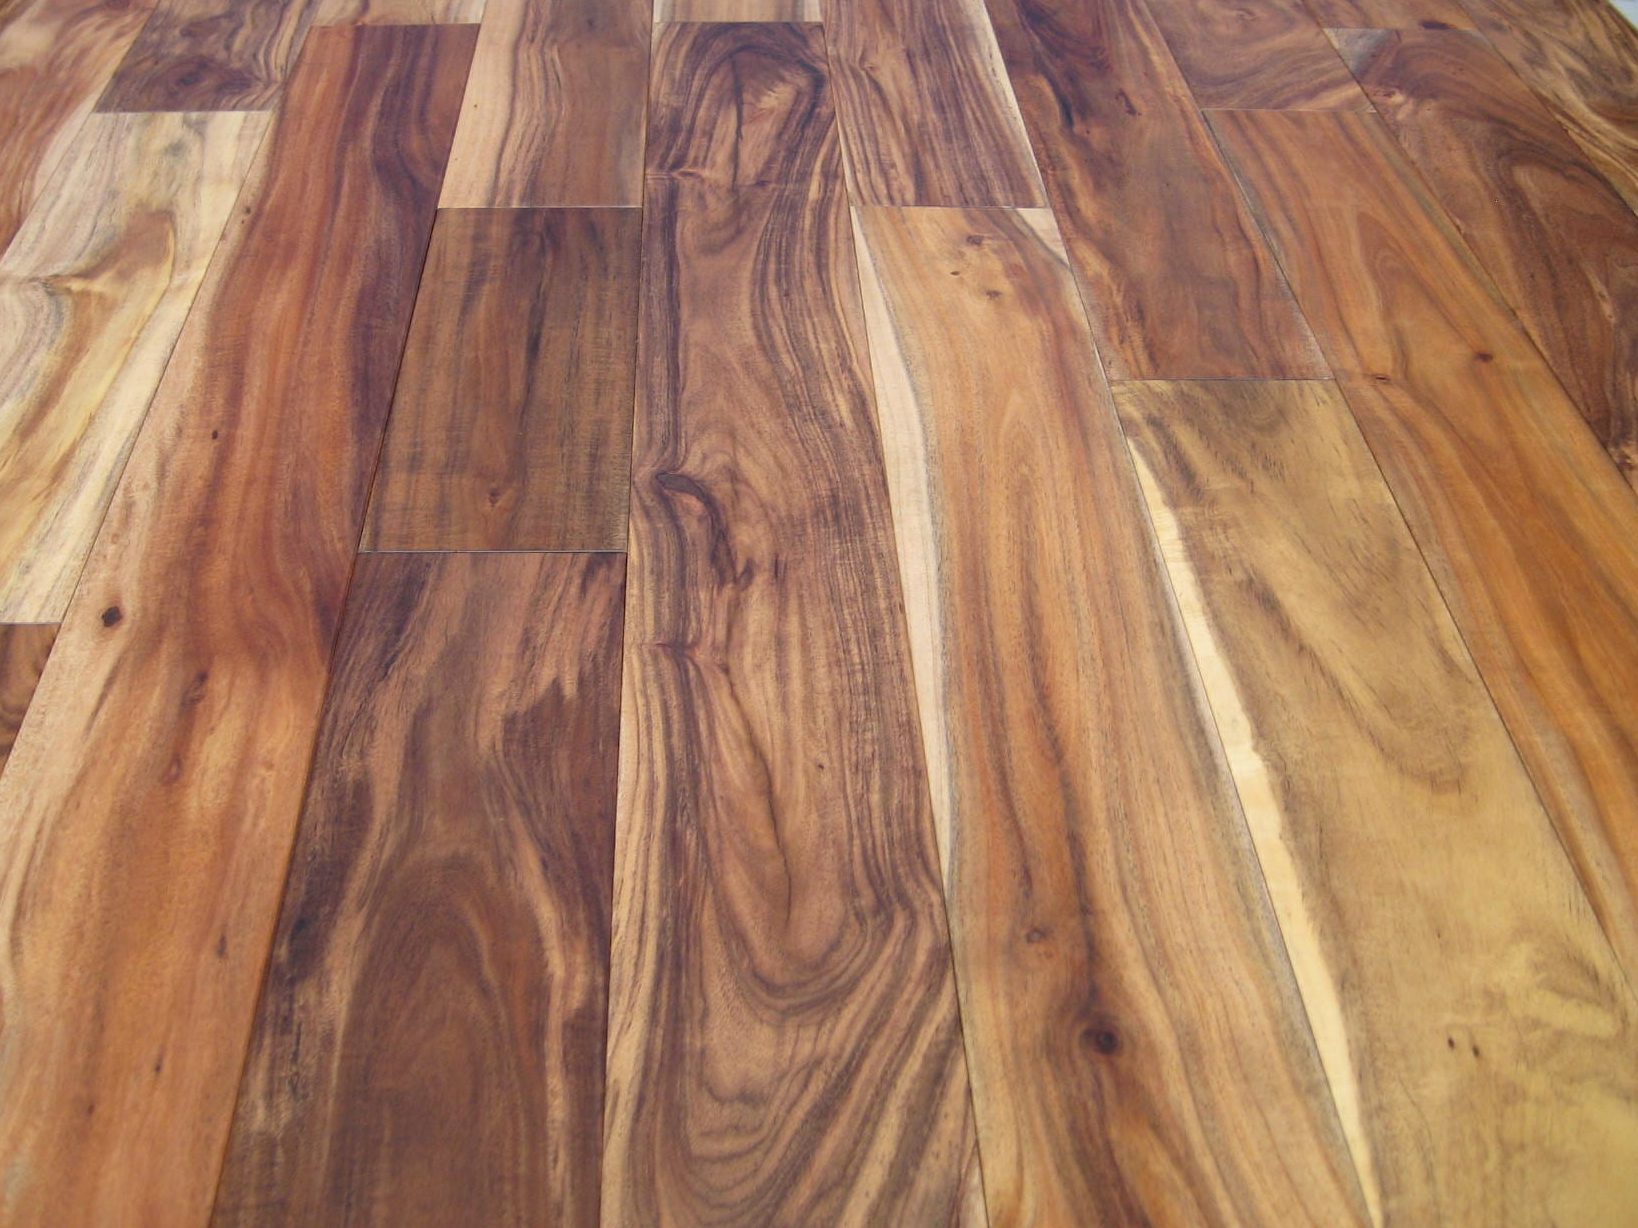 Solid Hardwood Flooring, Pictures Of Acacia Hardwood Floors